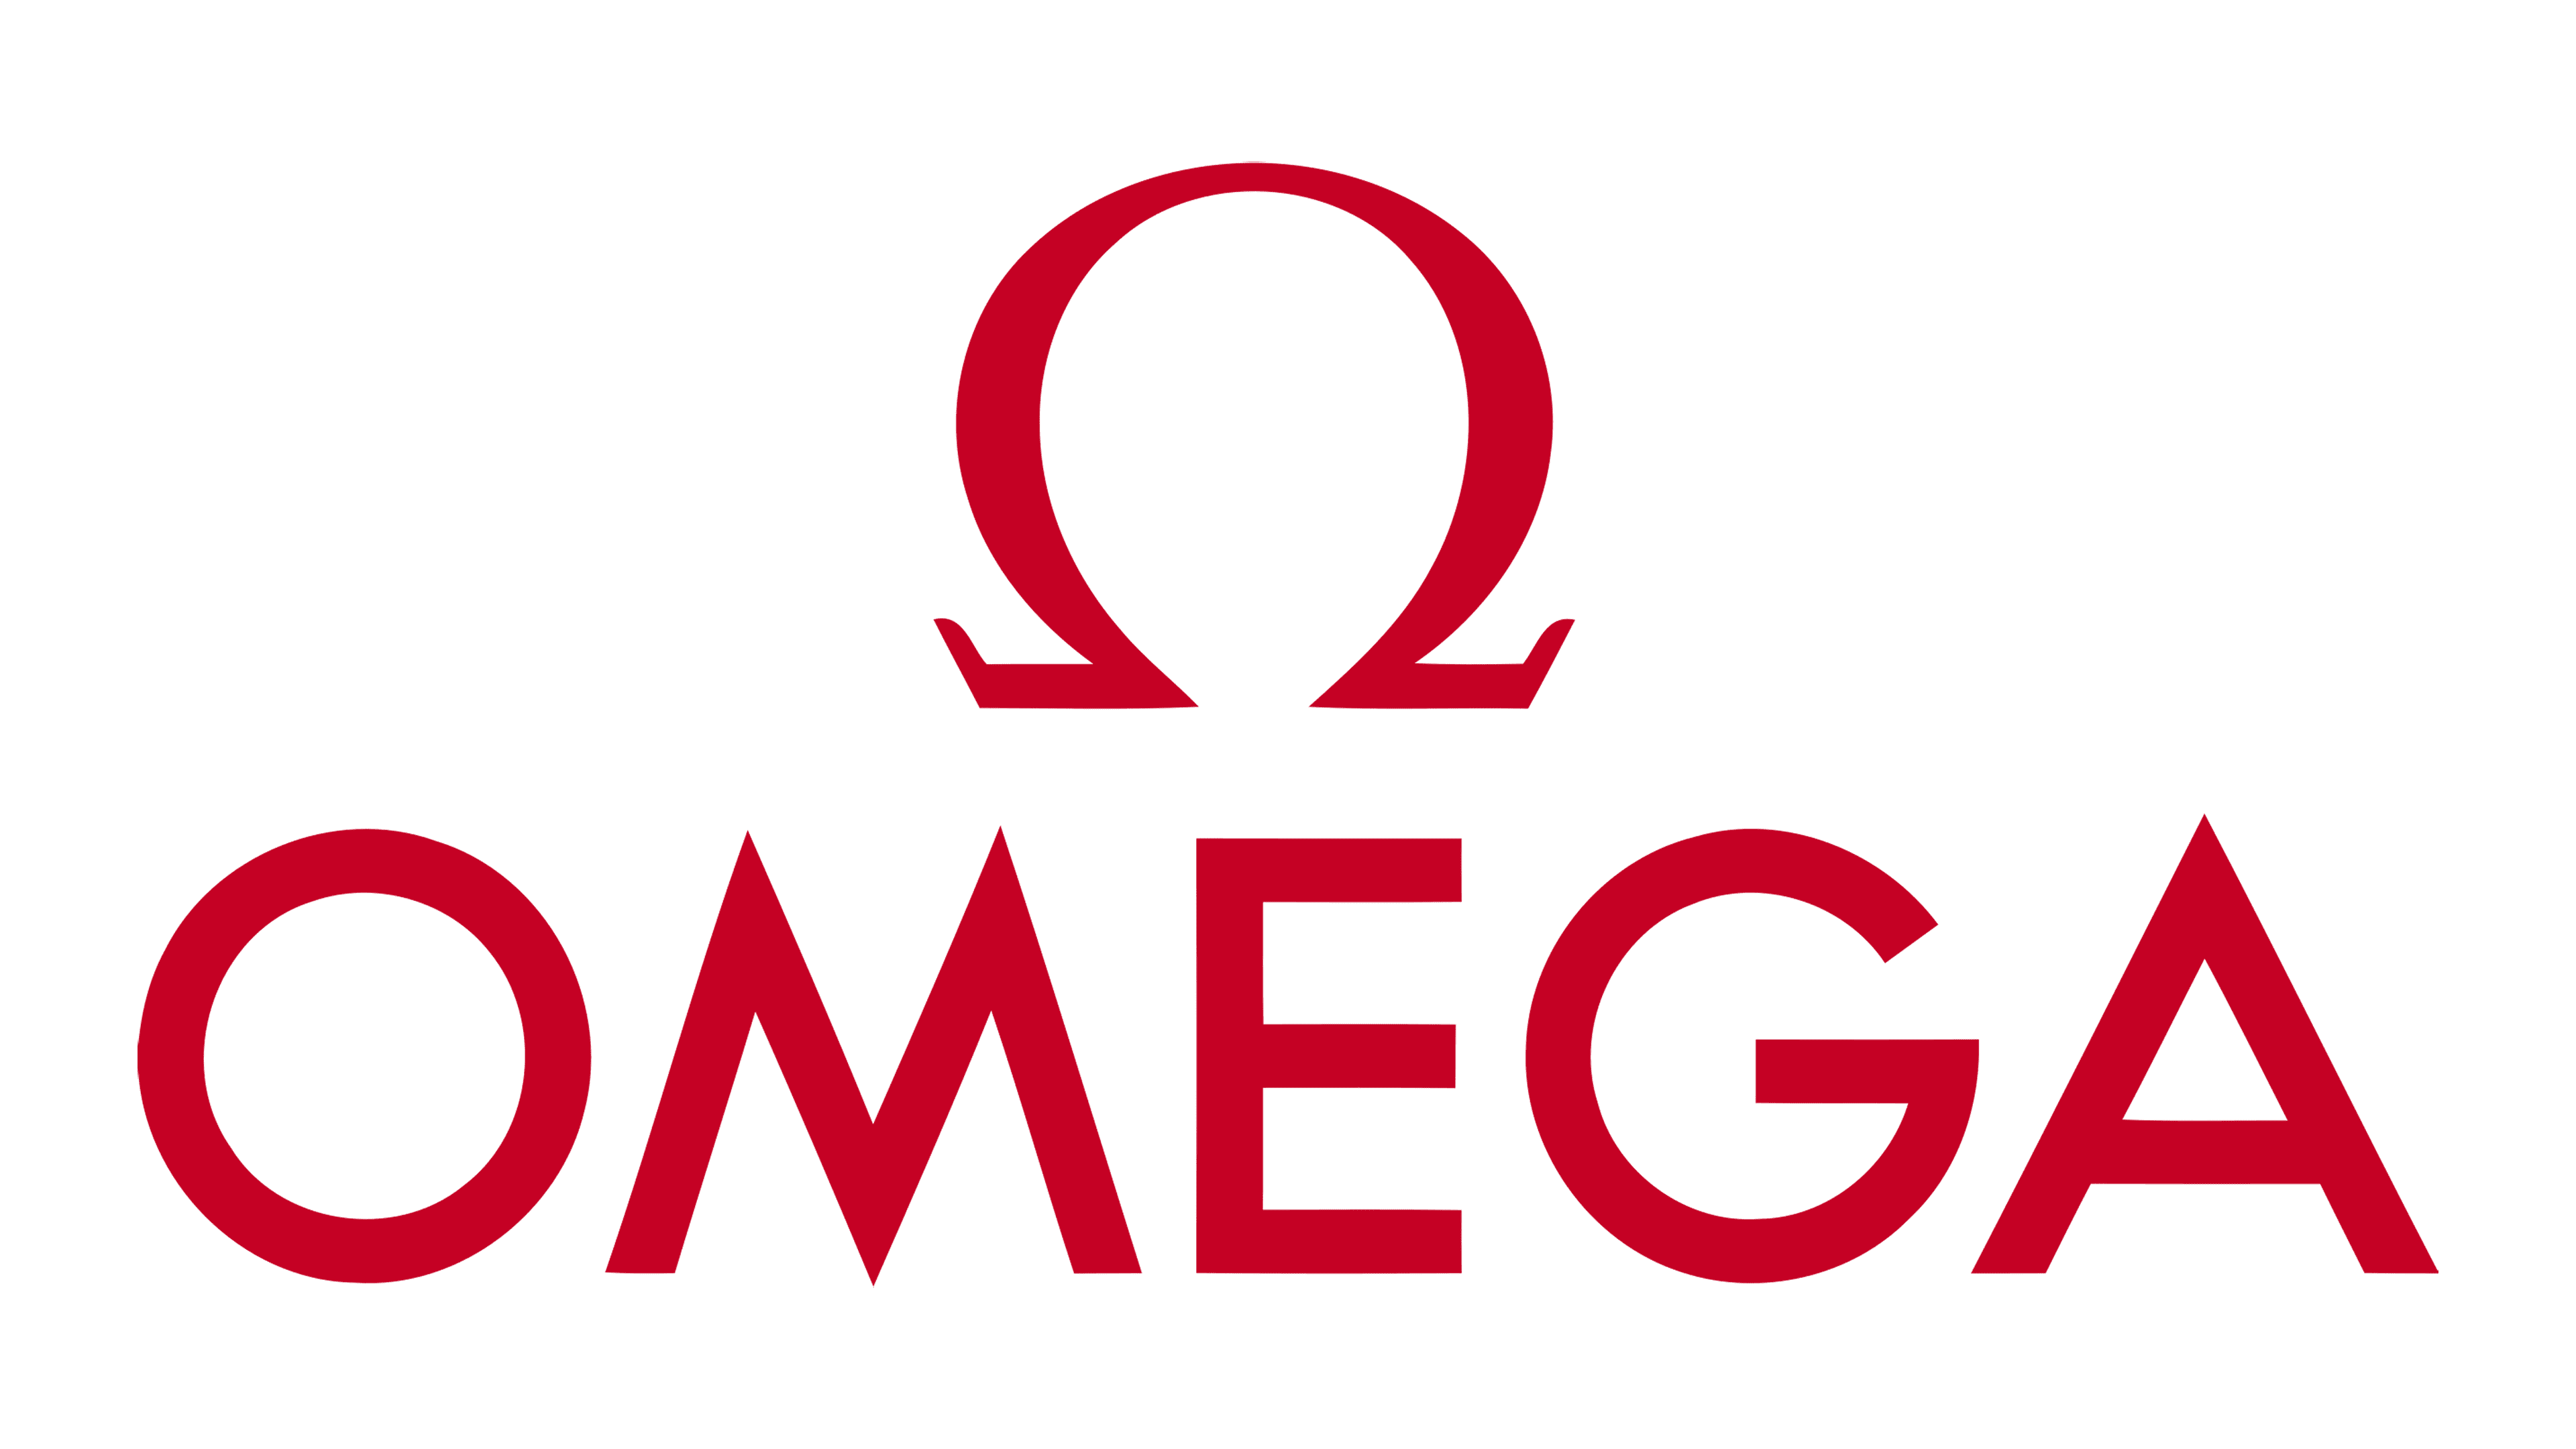 Omega Logo